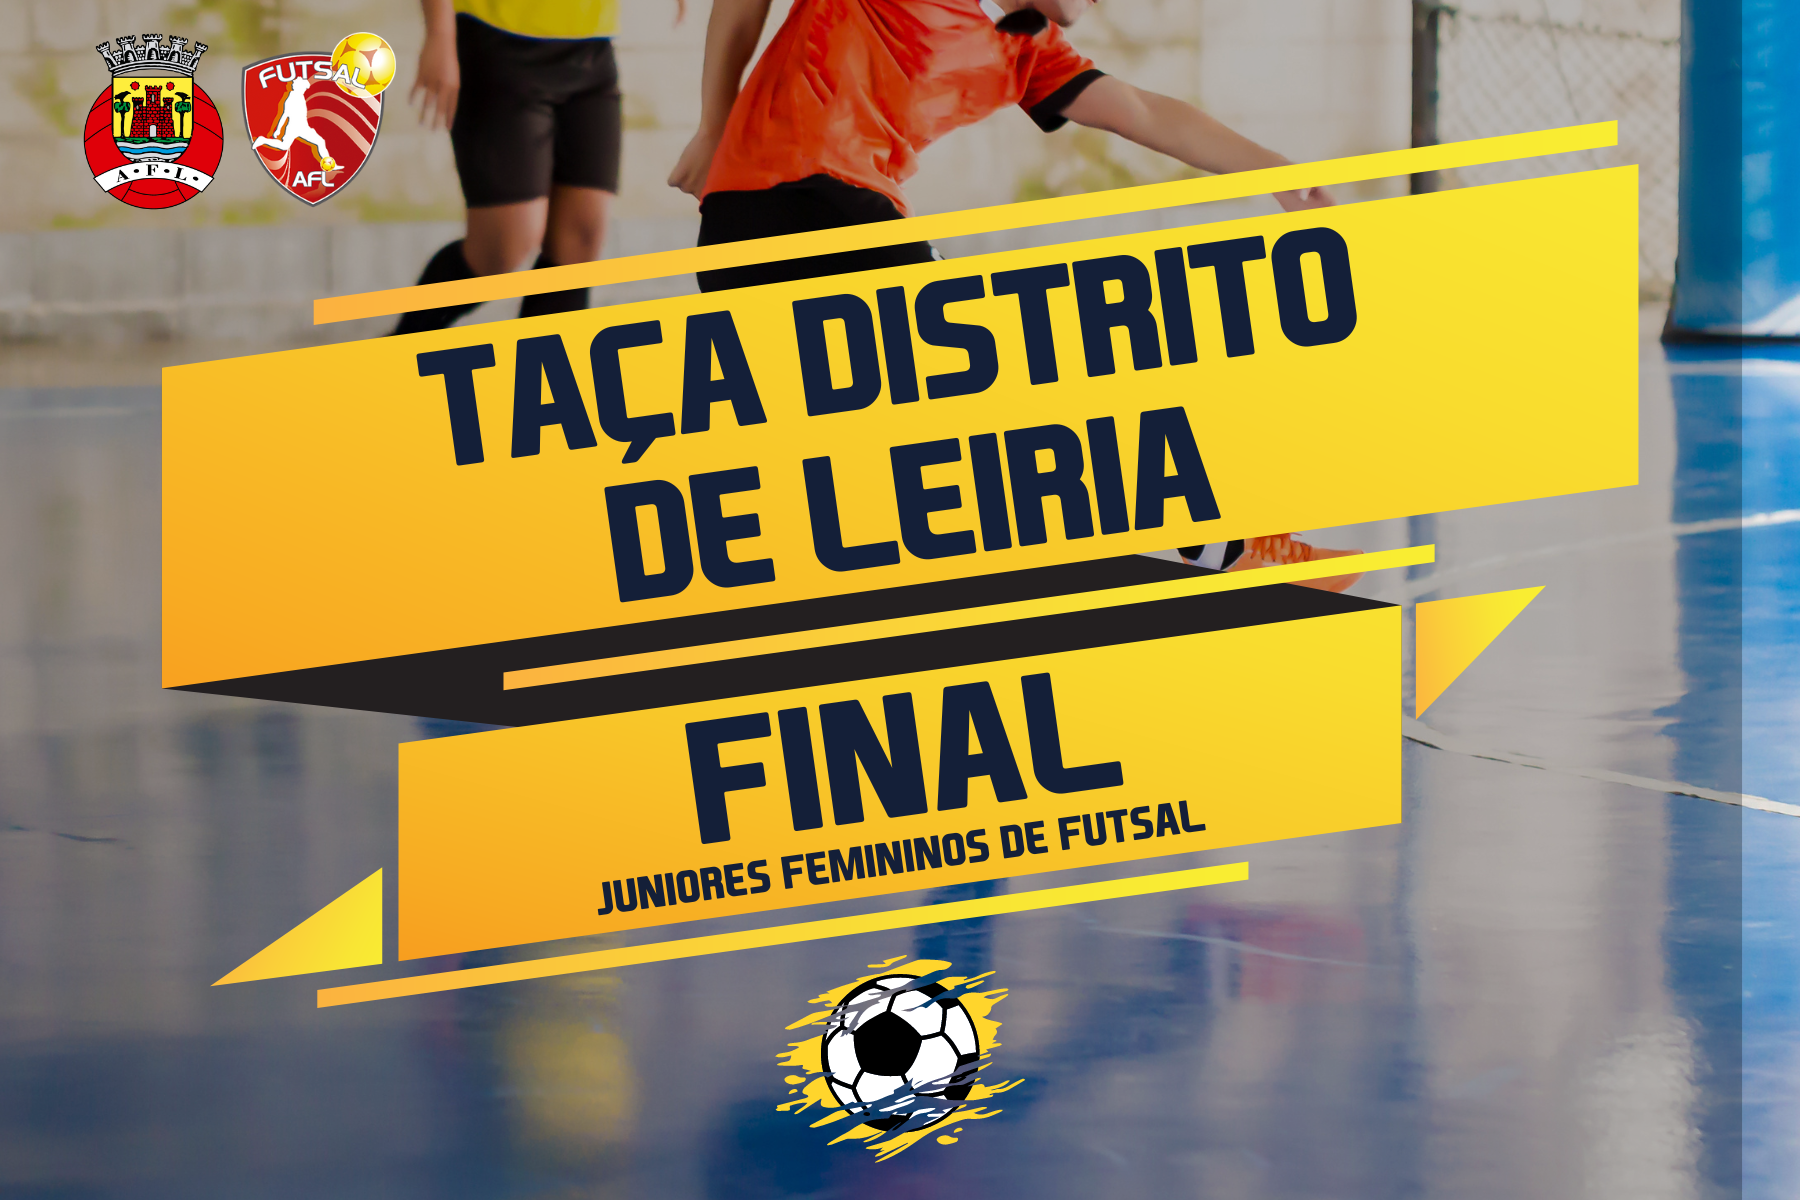 Final da Taça Distrito de Leiria joga-se no dia 01 de maio